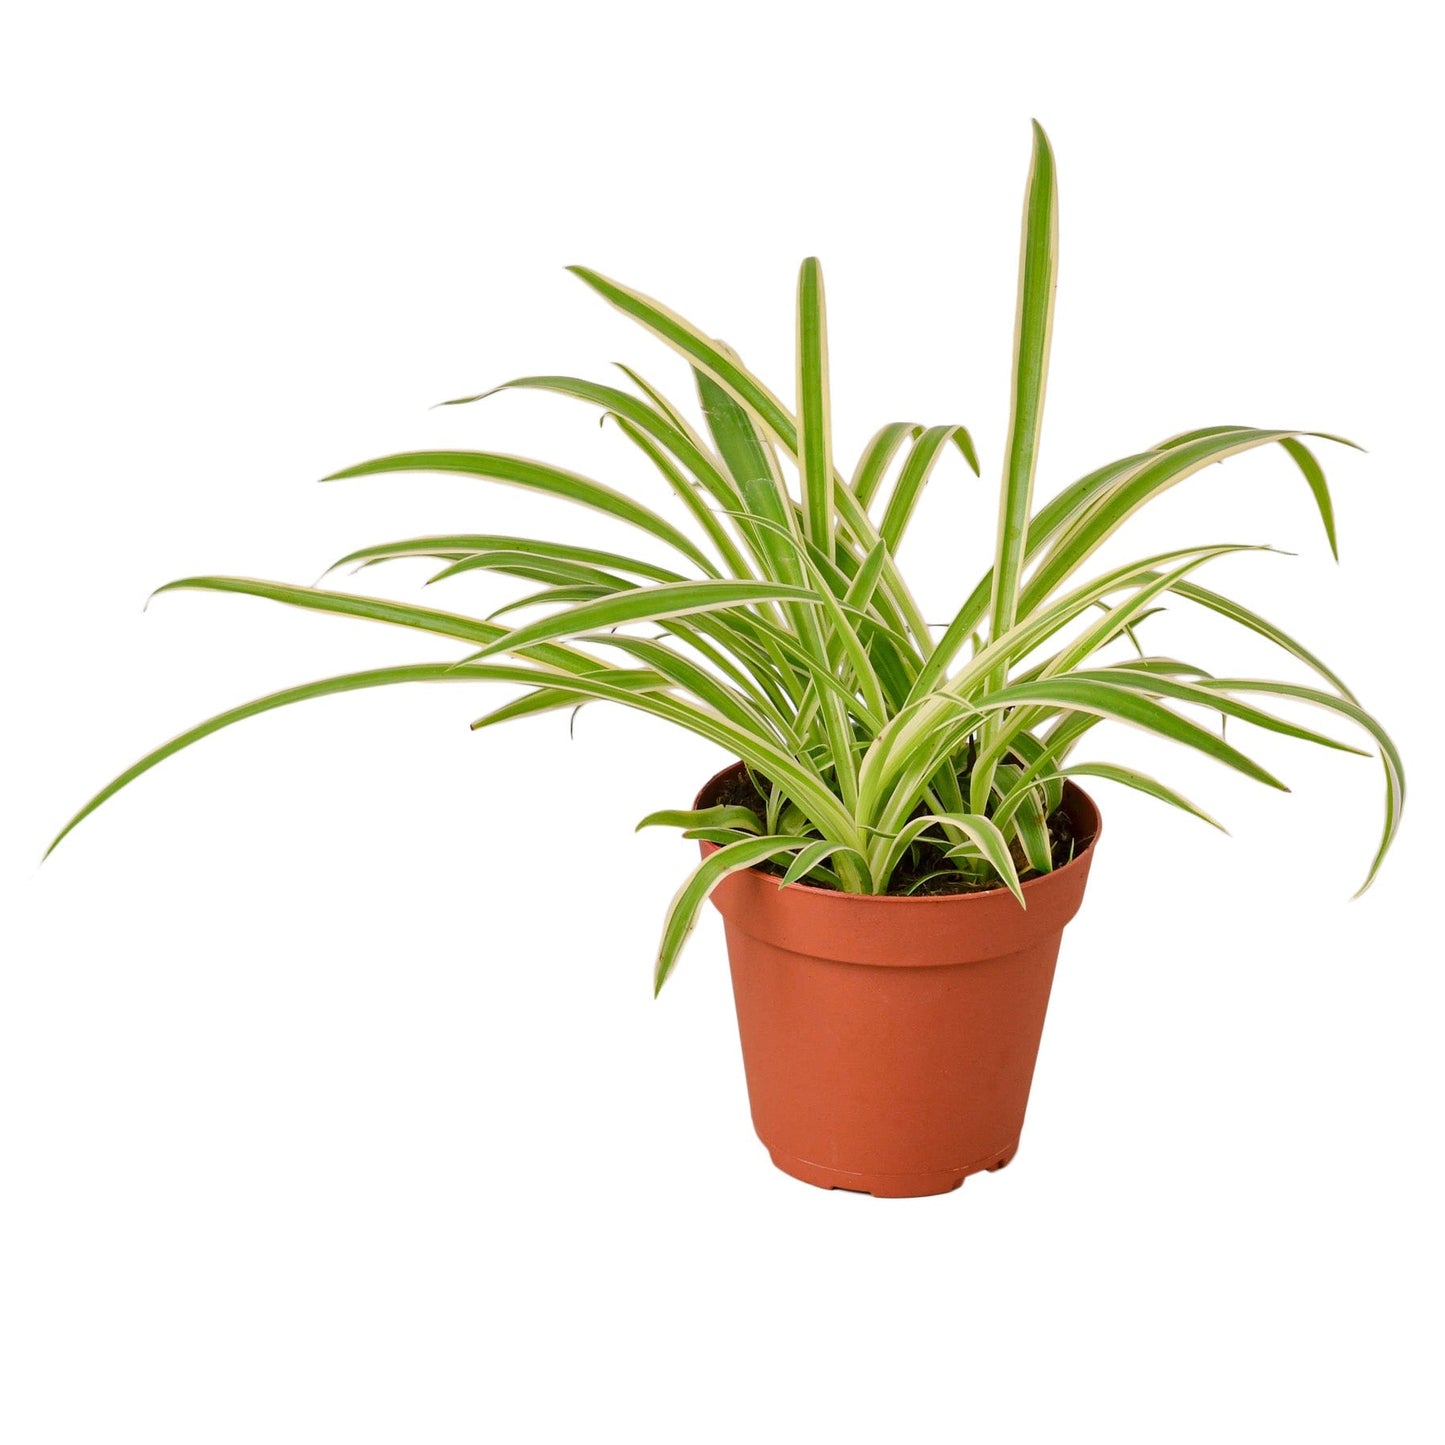 Spider Plant Reverse - 4" Pot - NURSERY POT ONLY